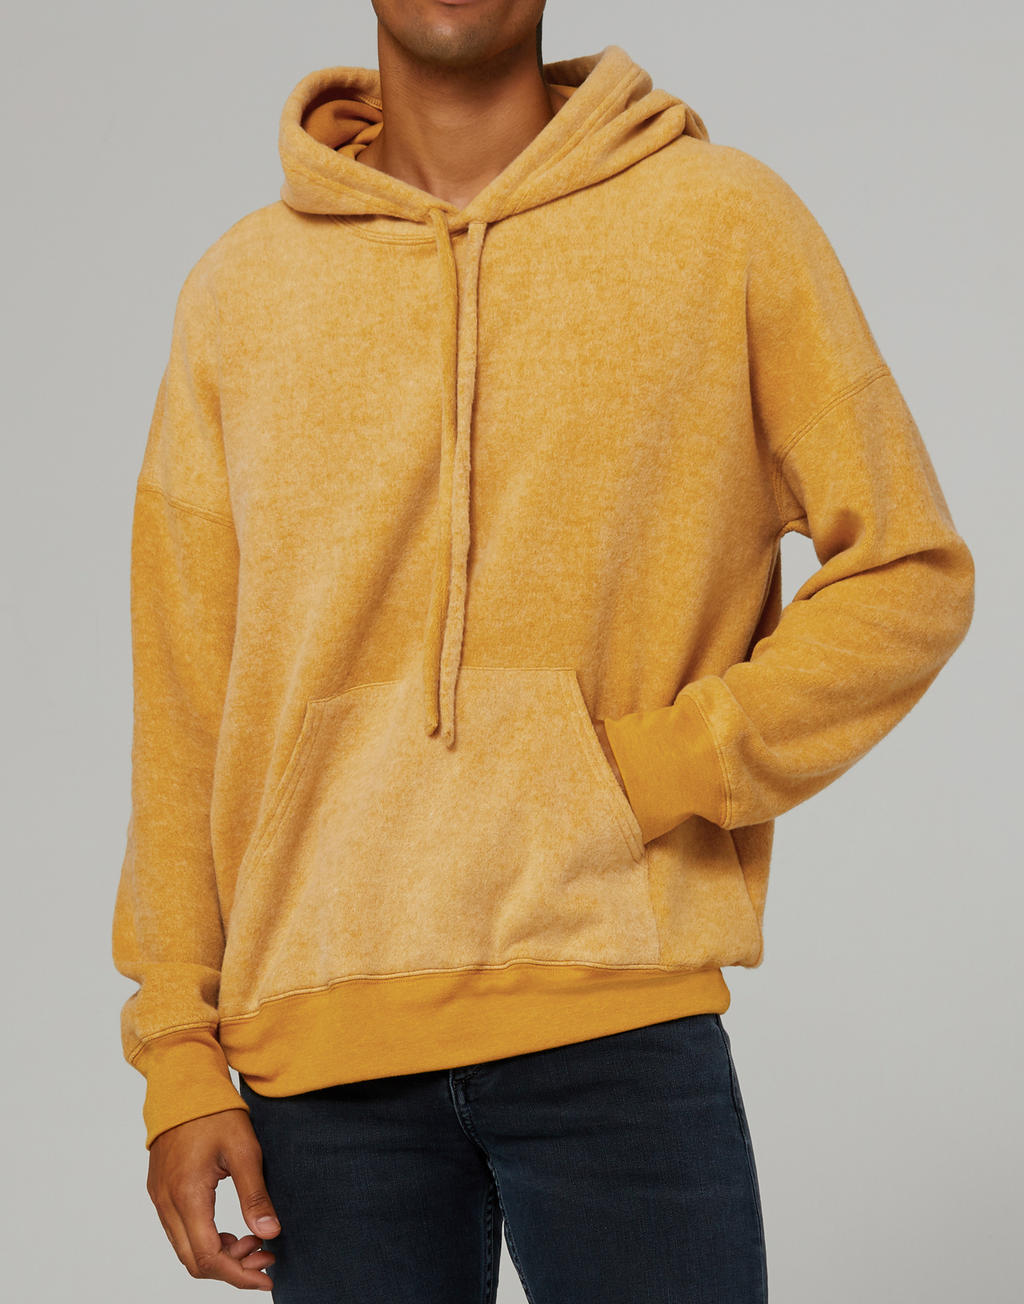  Unisex Sueded Fleece Pullover Hoodie in Farbe Heather Mustard